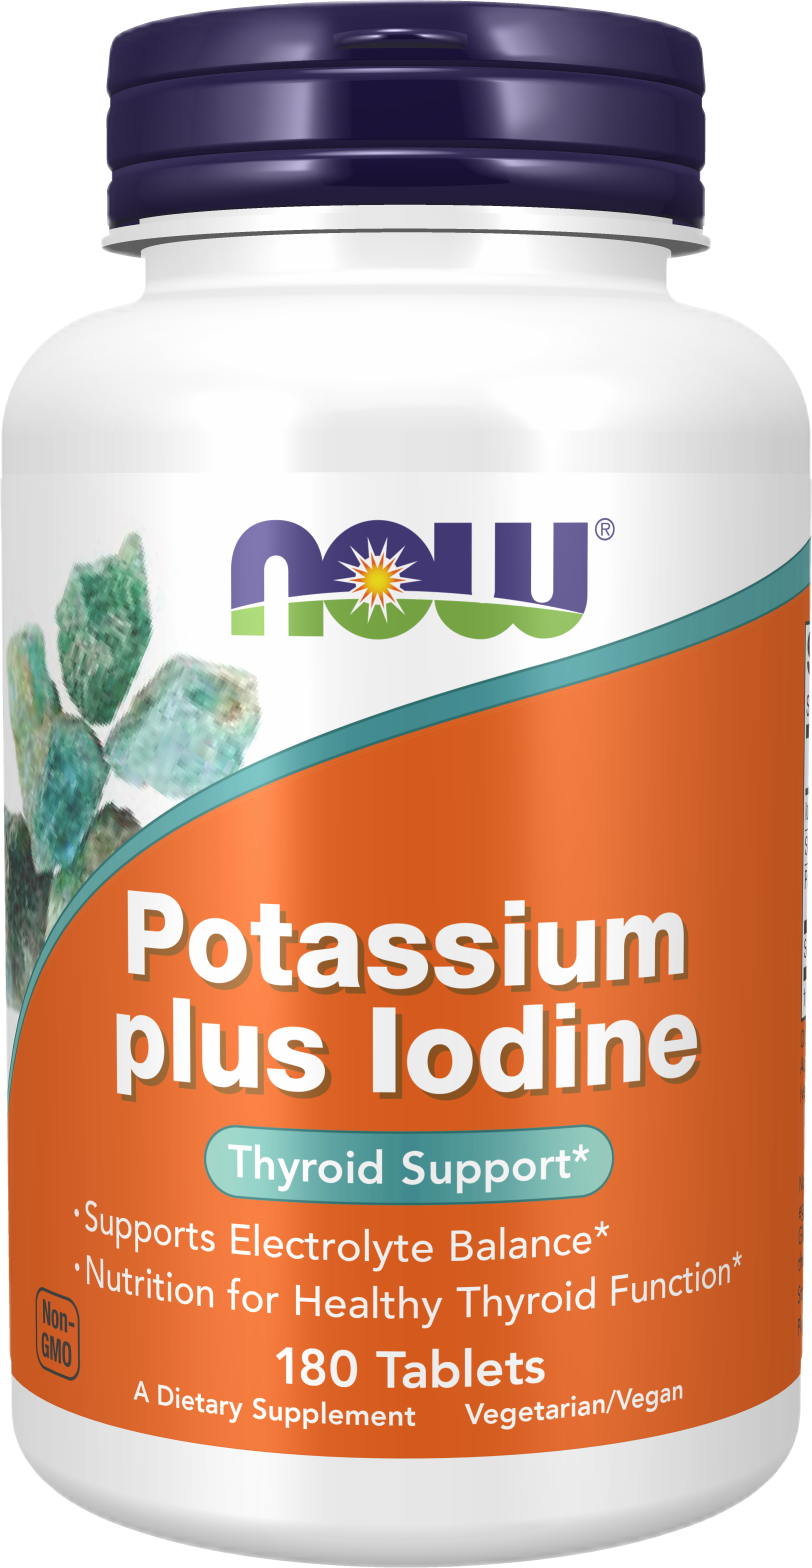 Potassium plus Iodine | Electrolyte Balance Support - BadiZdrav.BG